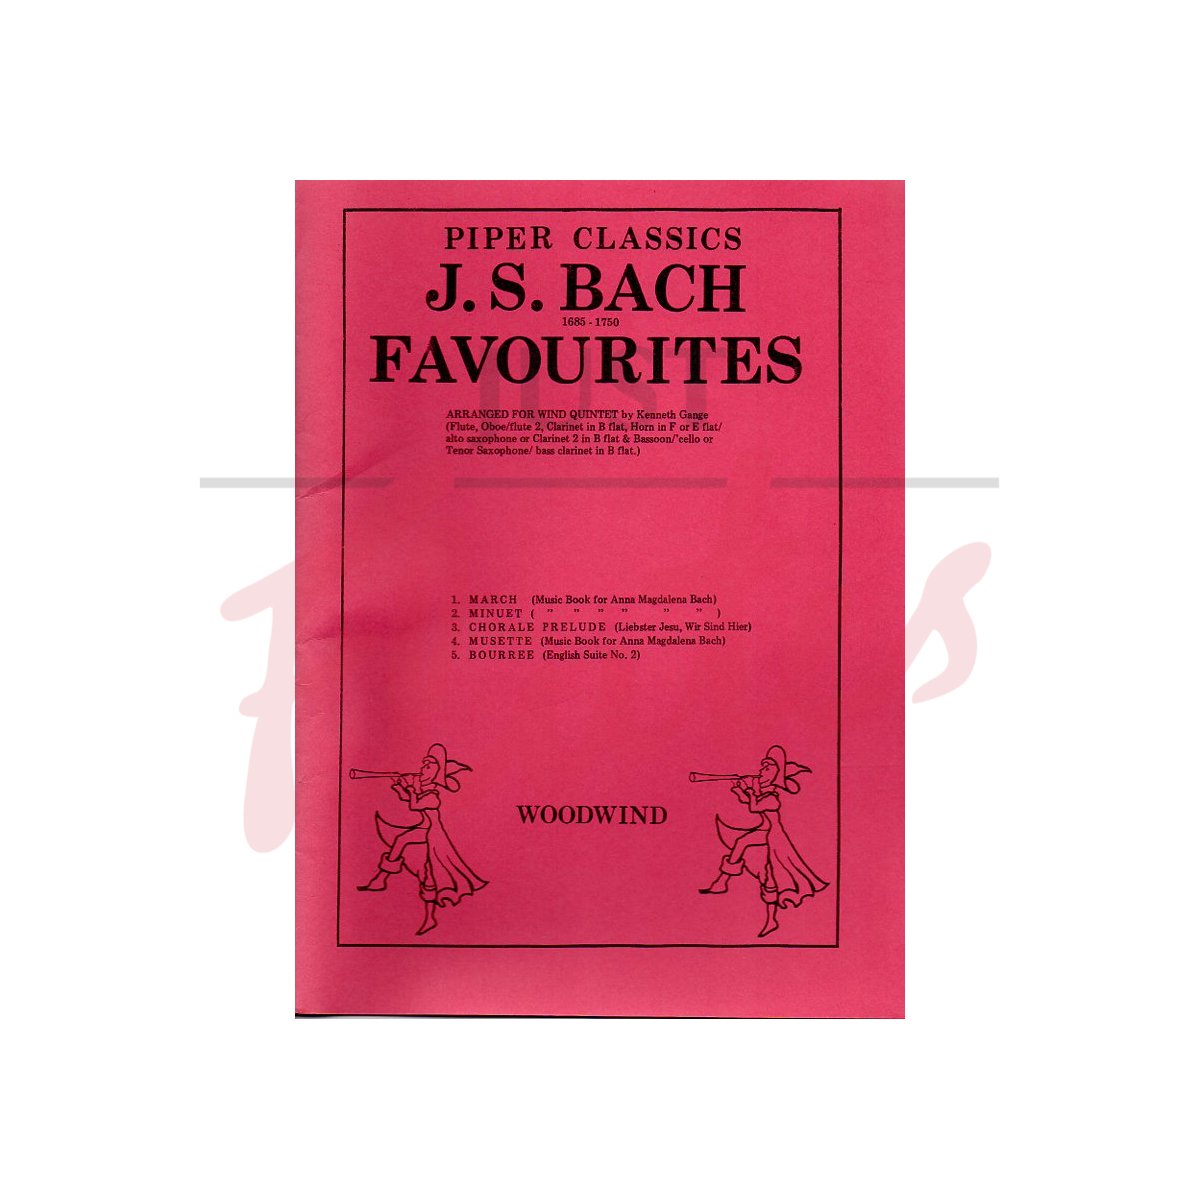 J.S.Bach Favourites arranged for Wind Quintet